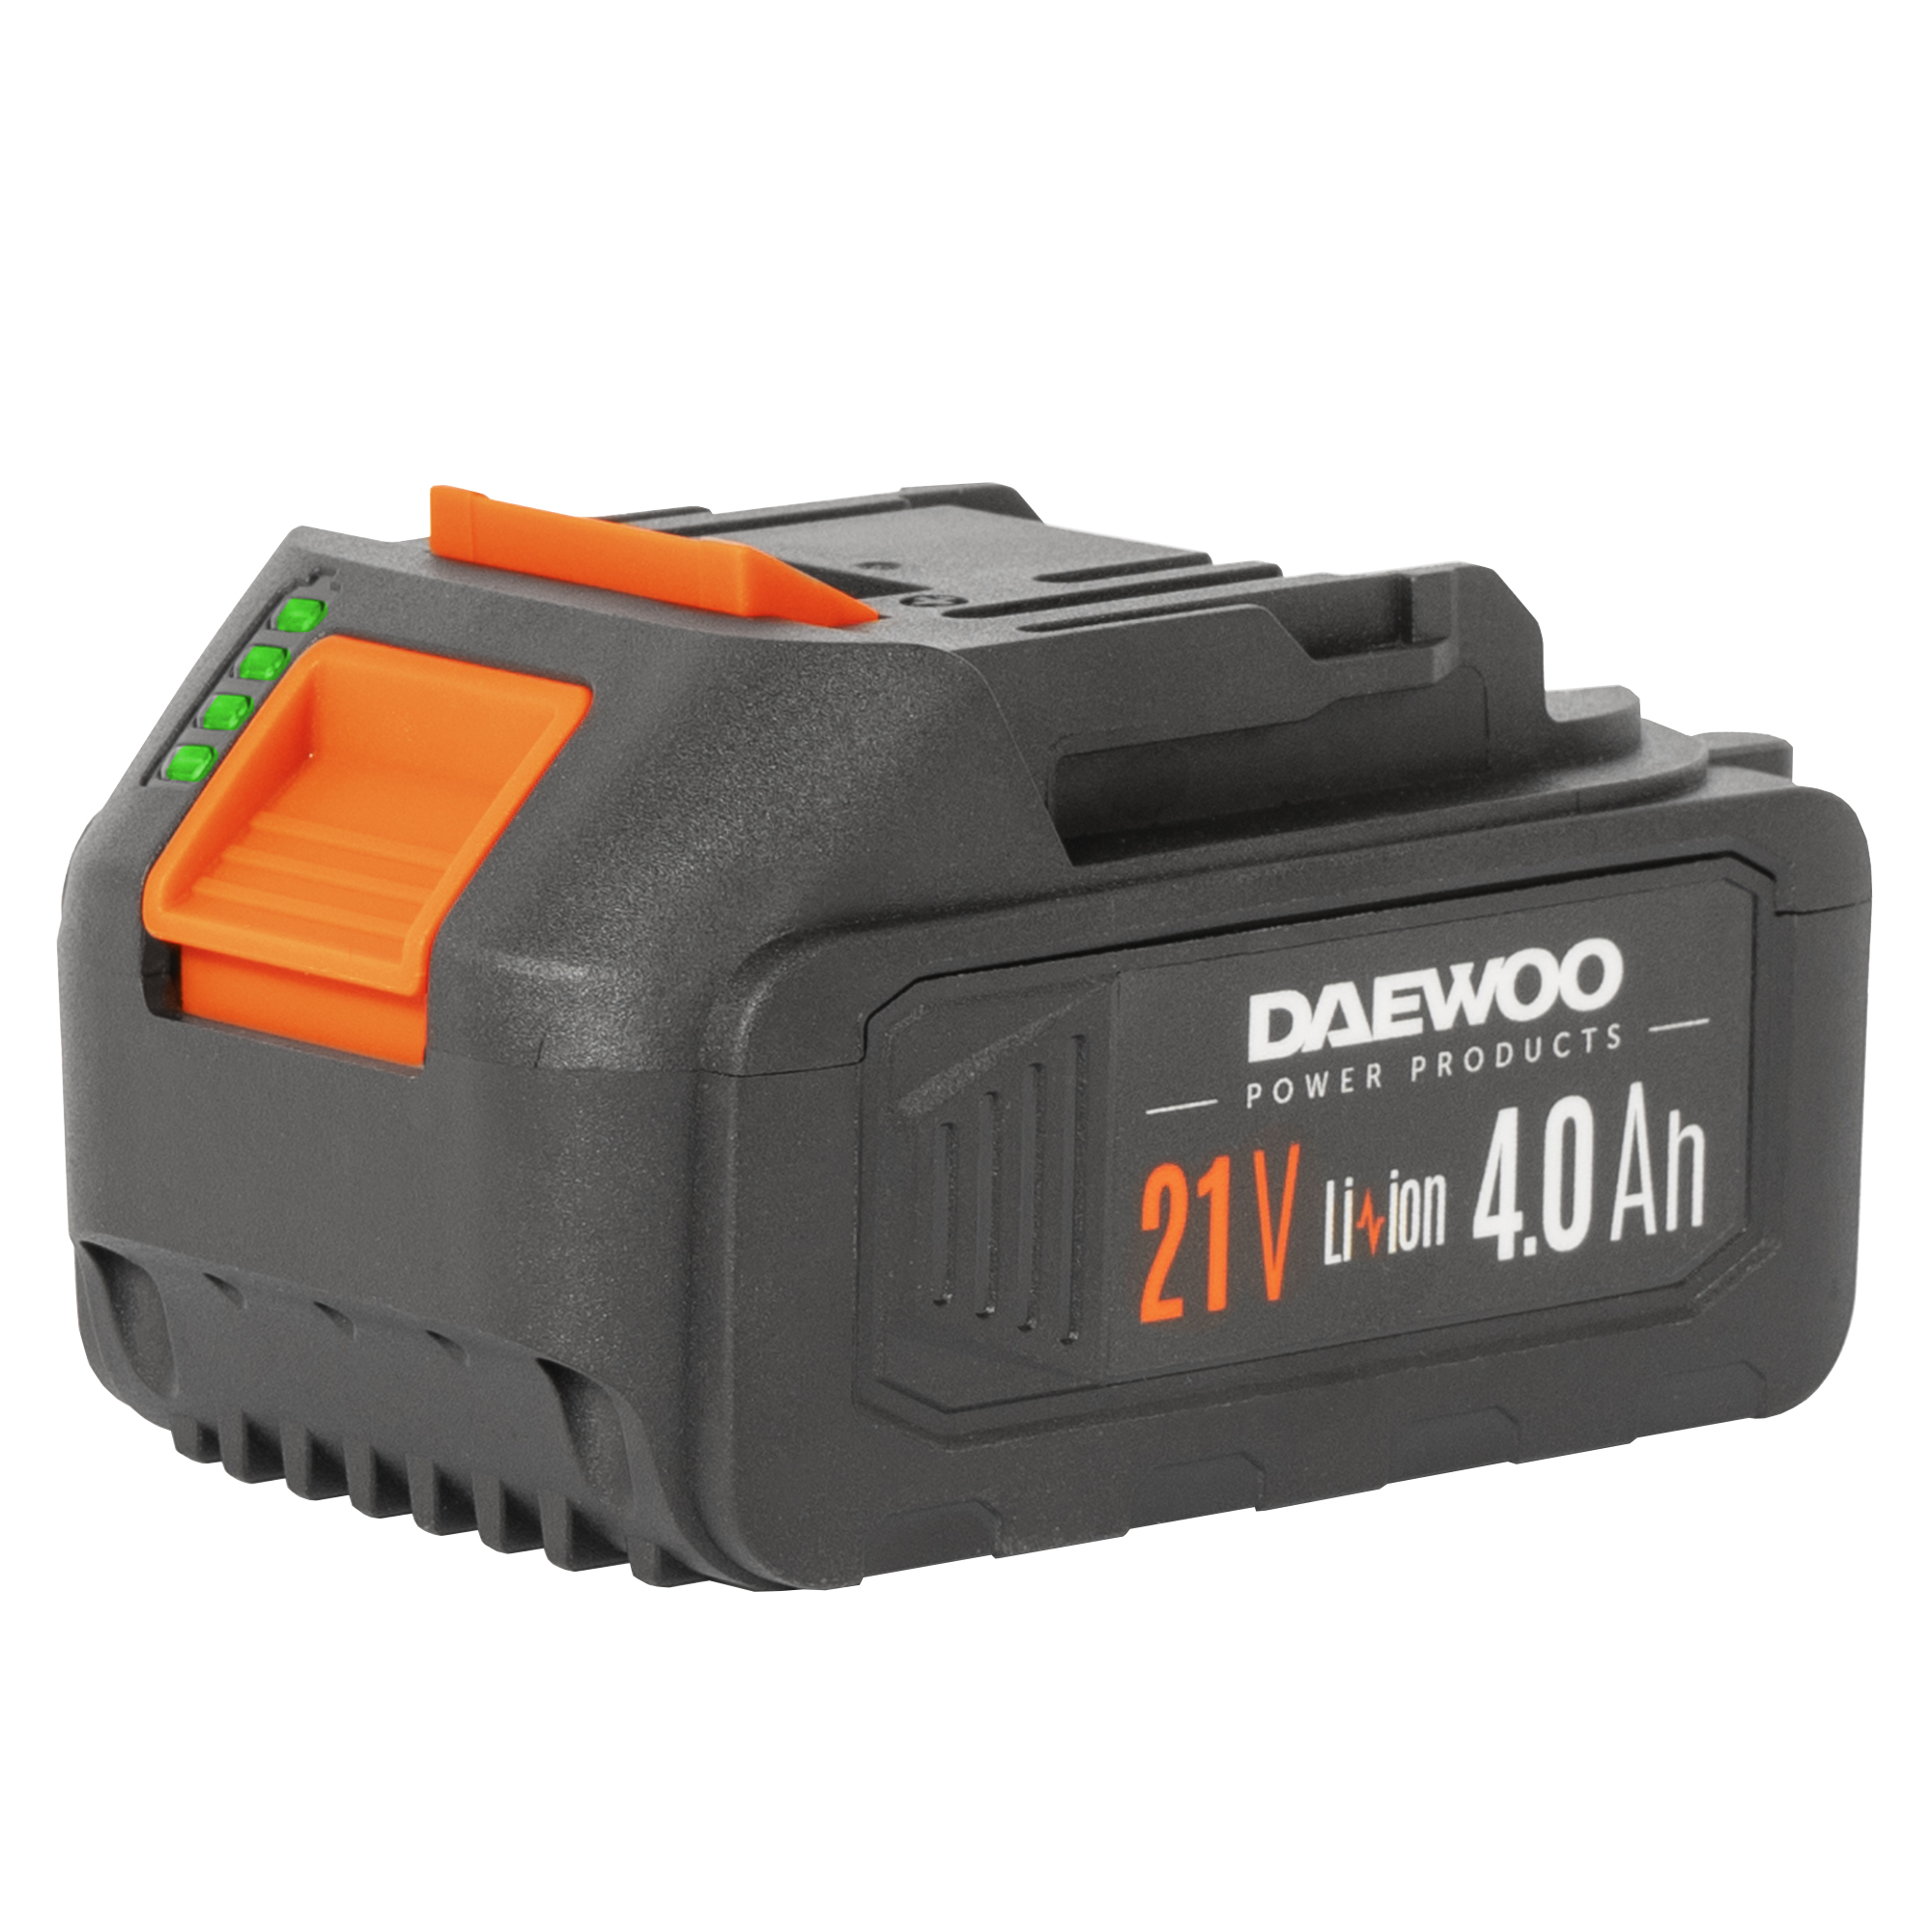 Батарея аккумуляторная Daewoo Dabt 4021li аккумулятор daewoo dabt 4021li 21в li ion 4ач